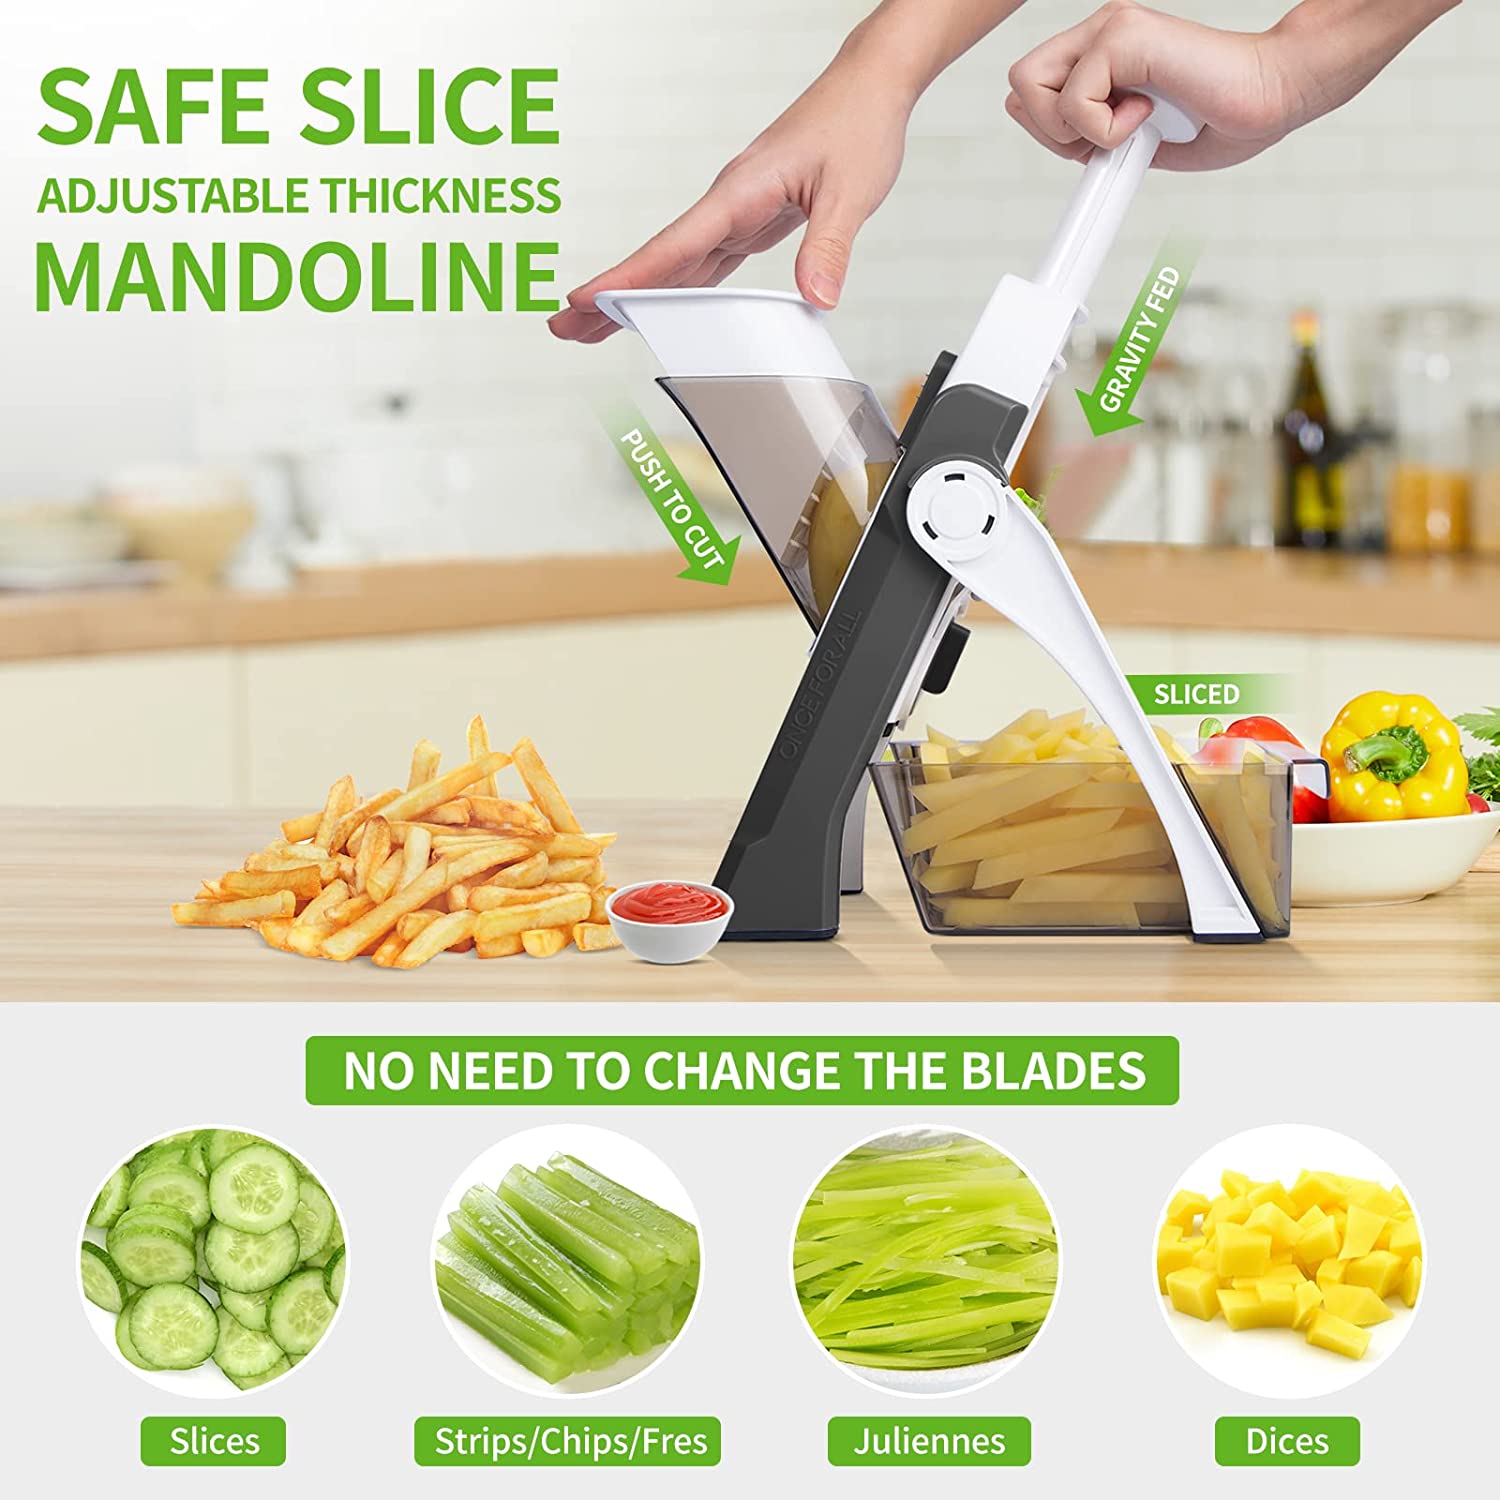 Manual Vegetable Cutter Slicer Kitchen Accessories